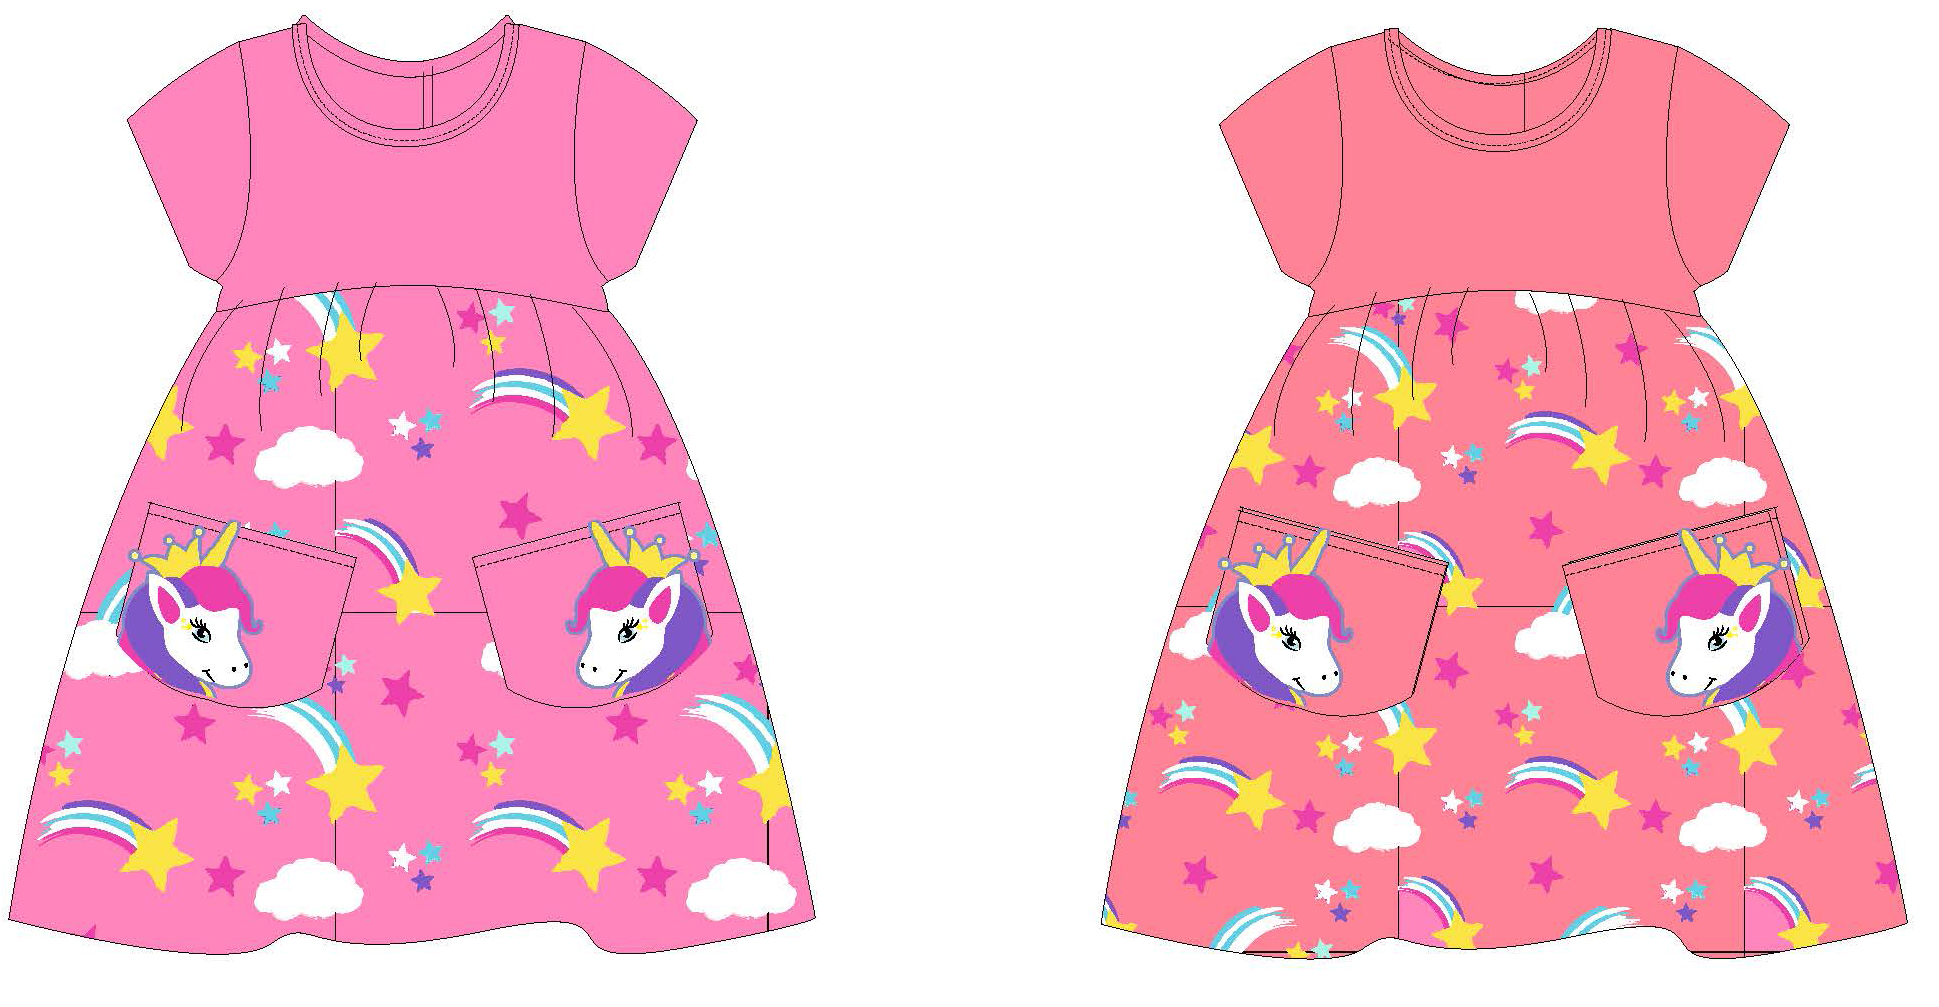 Girl's Short-Sleeved Knit DRESS w/ Cargo Pockets  - Unicorn & Rainbow Star Print - Size 4-6X